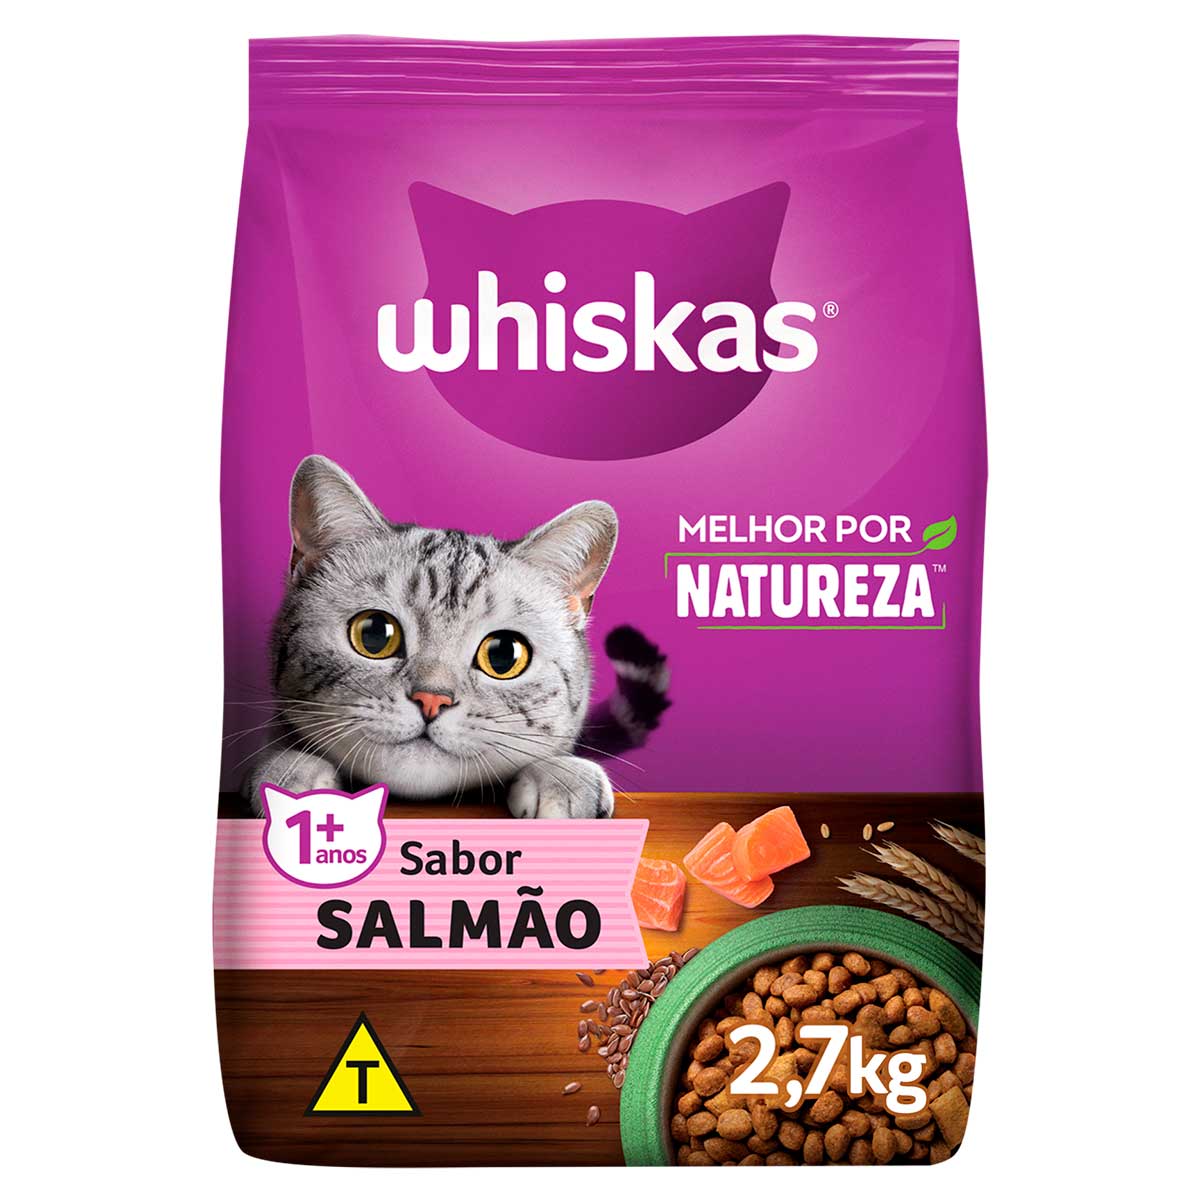 racao-para-gato-adulto-+-1-ano-whiskas-melhor-por-natureza-salmao-2,7-kg-1.jpg